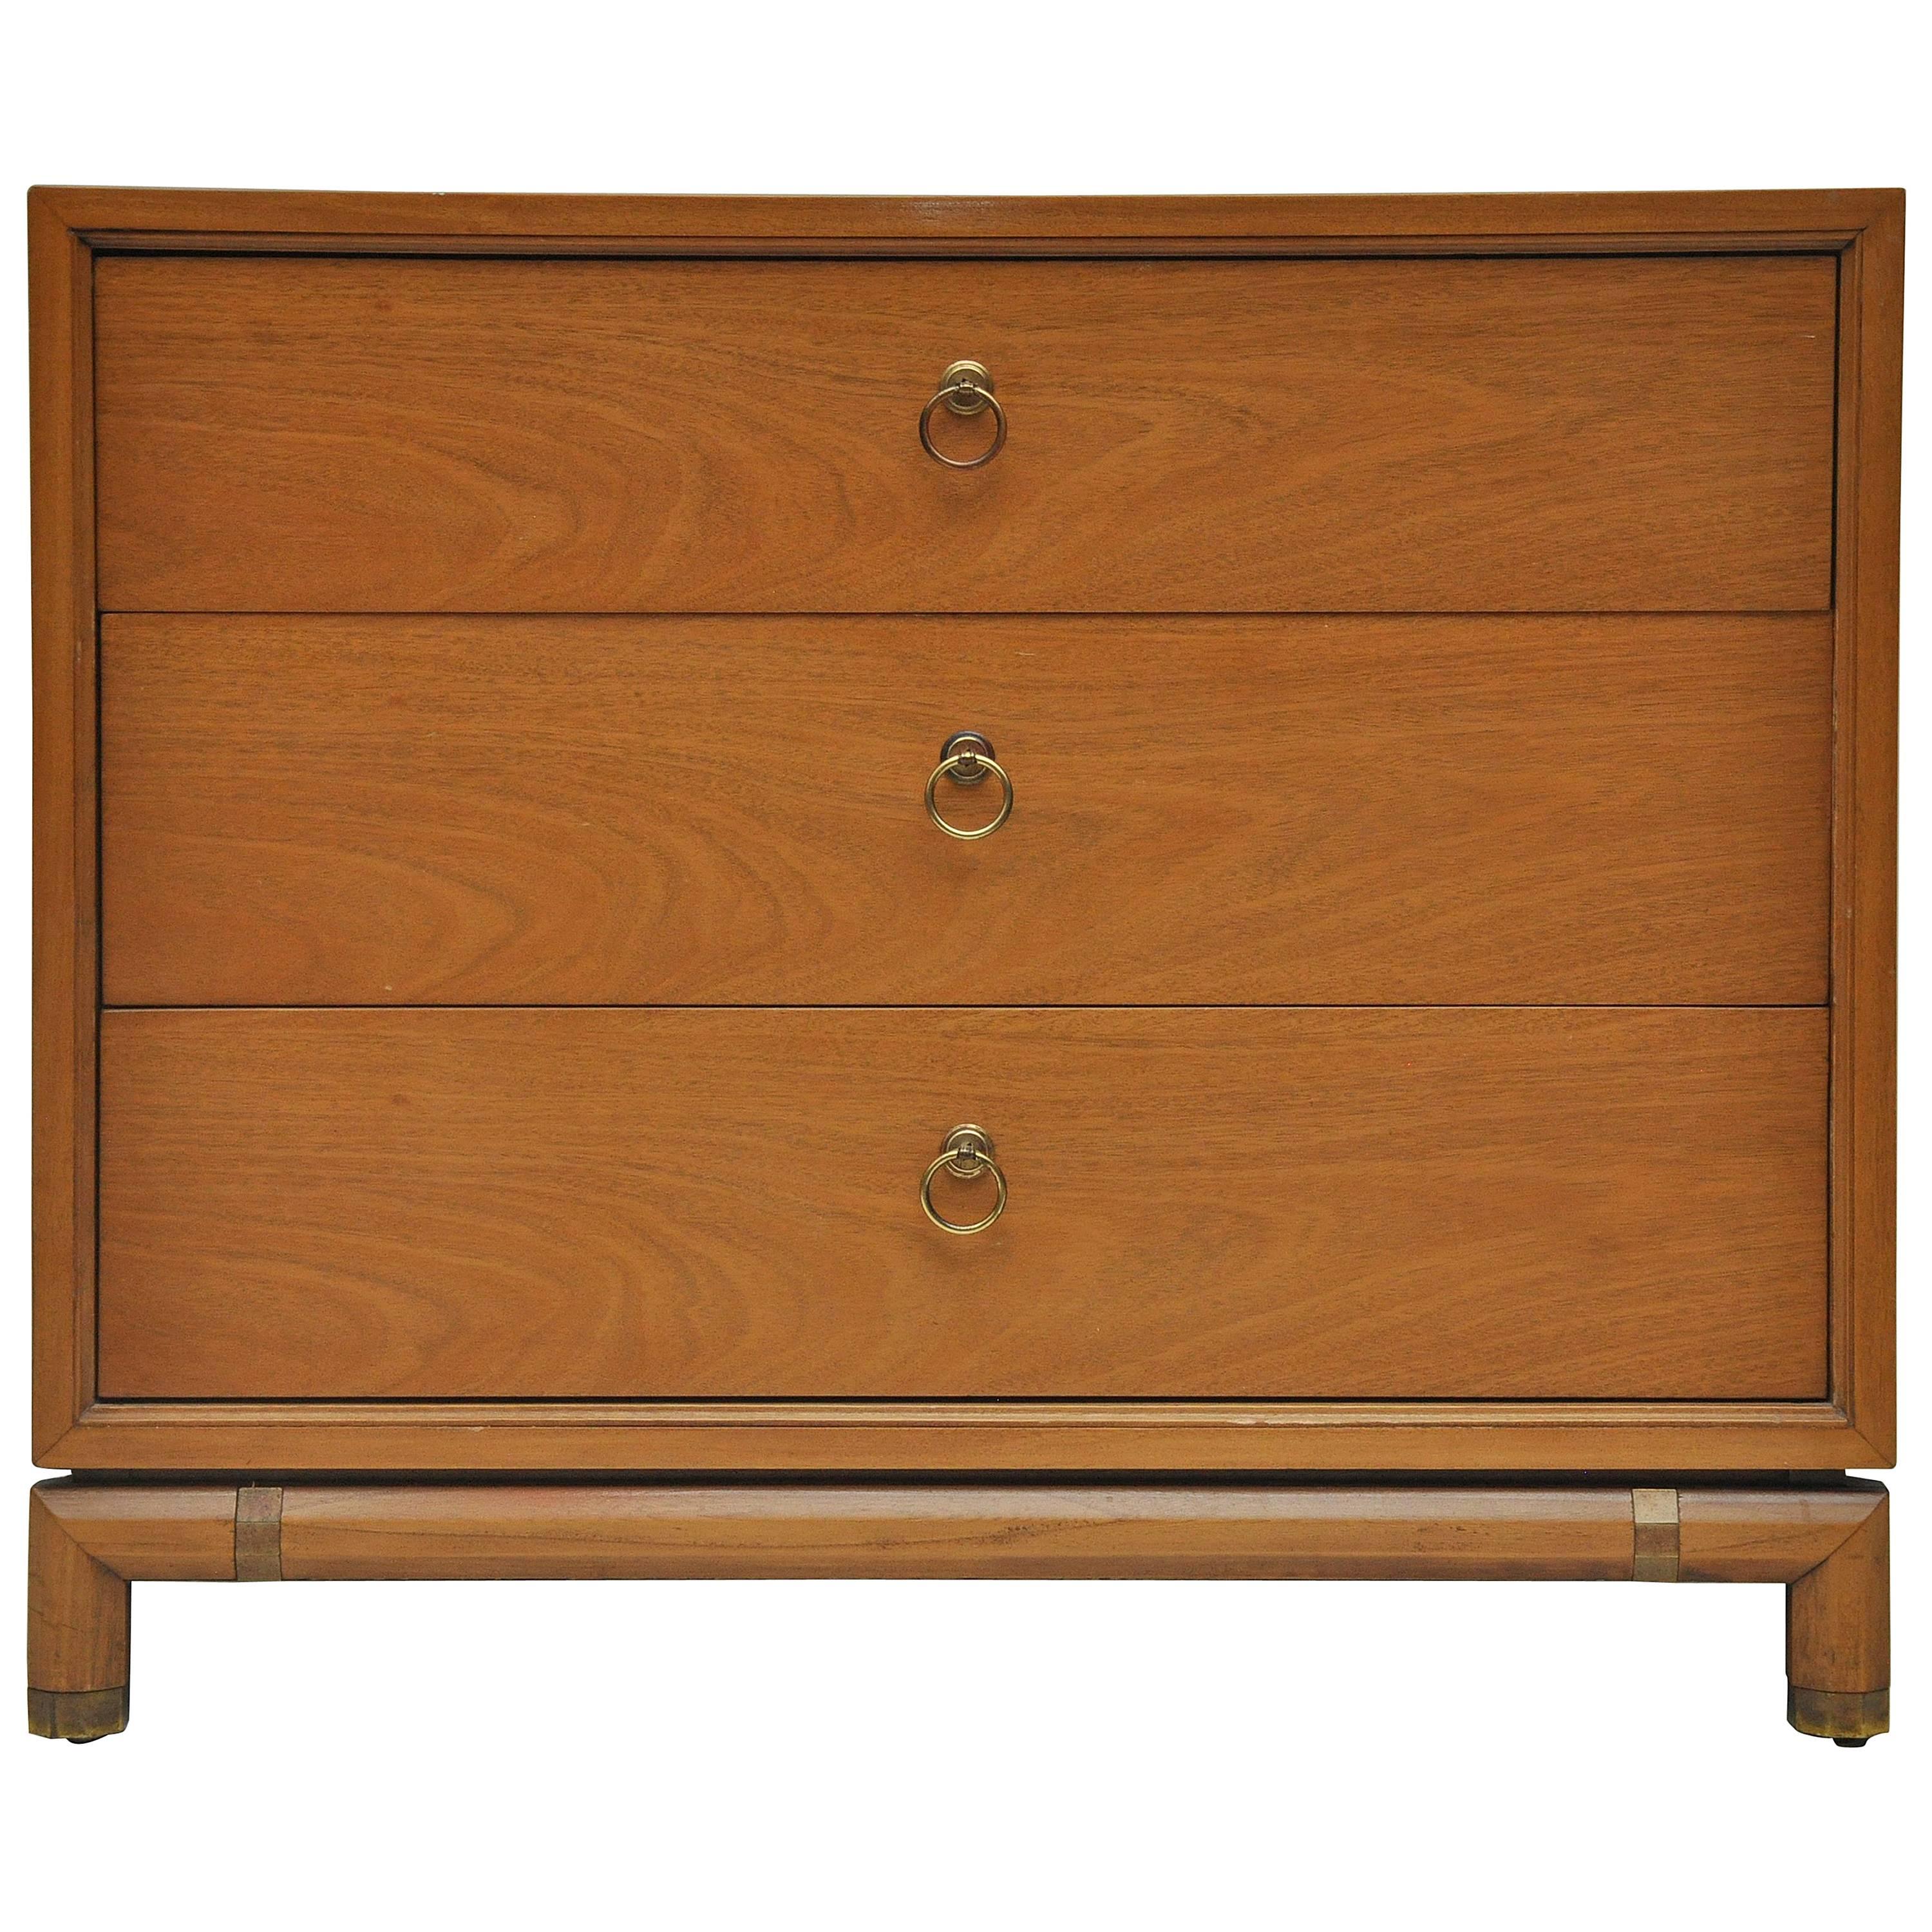 Kent-Coffey Three-Drawer Dresser